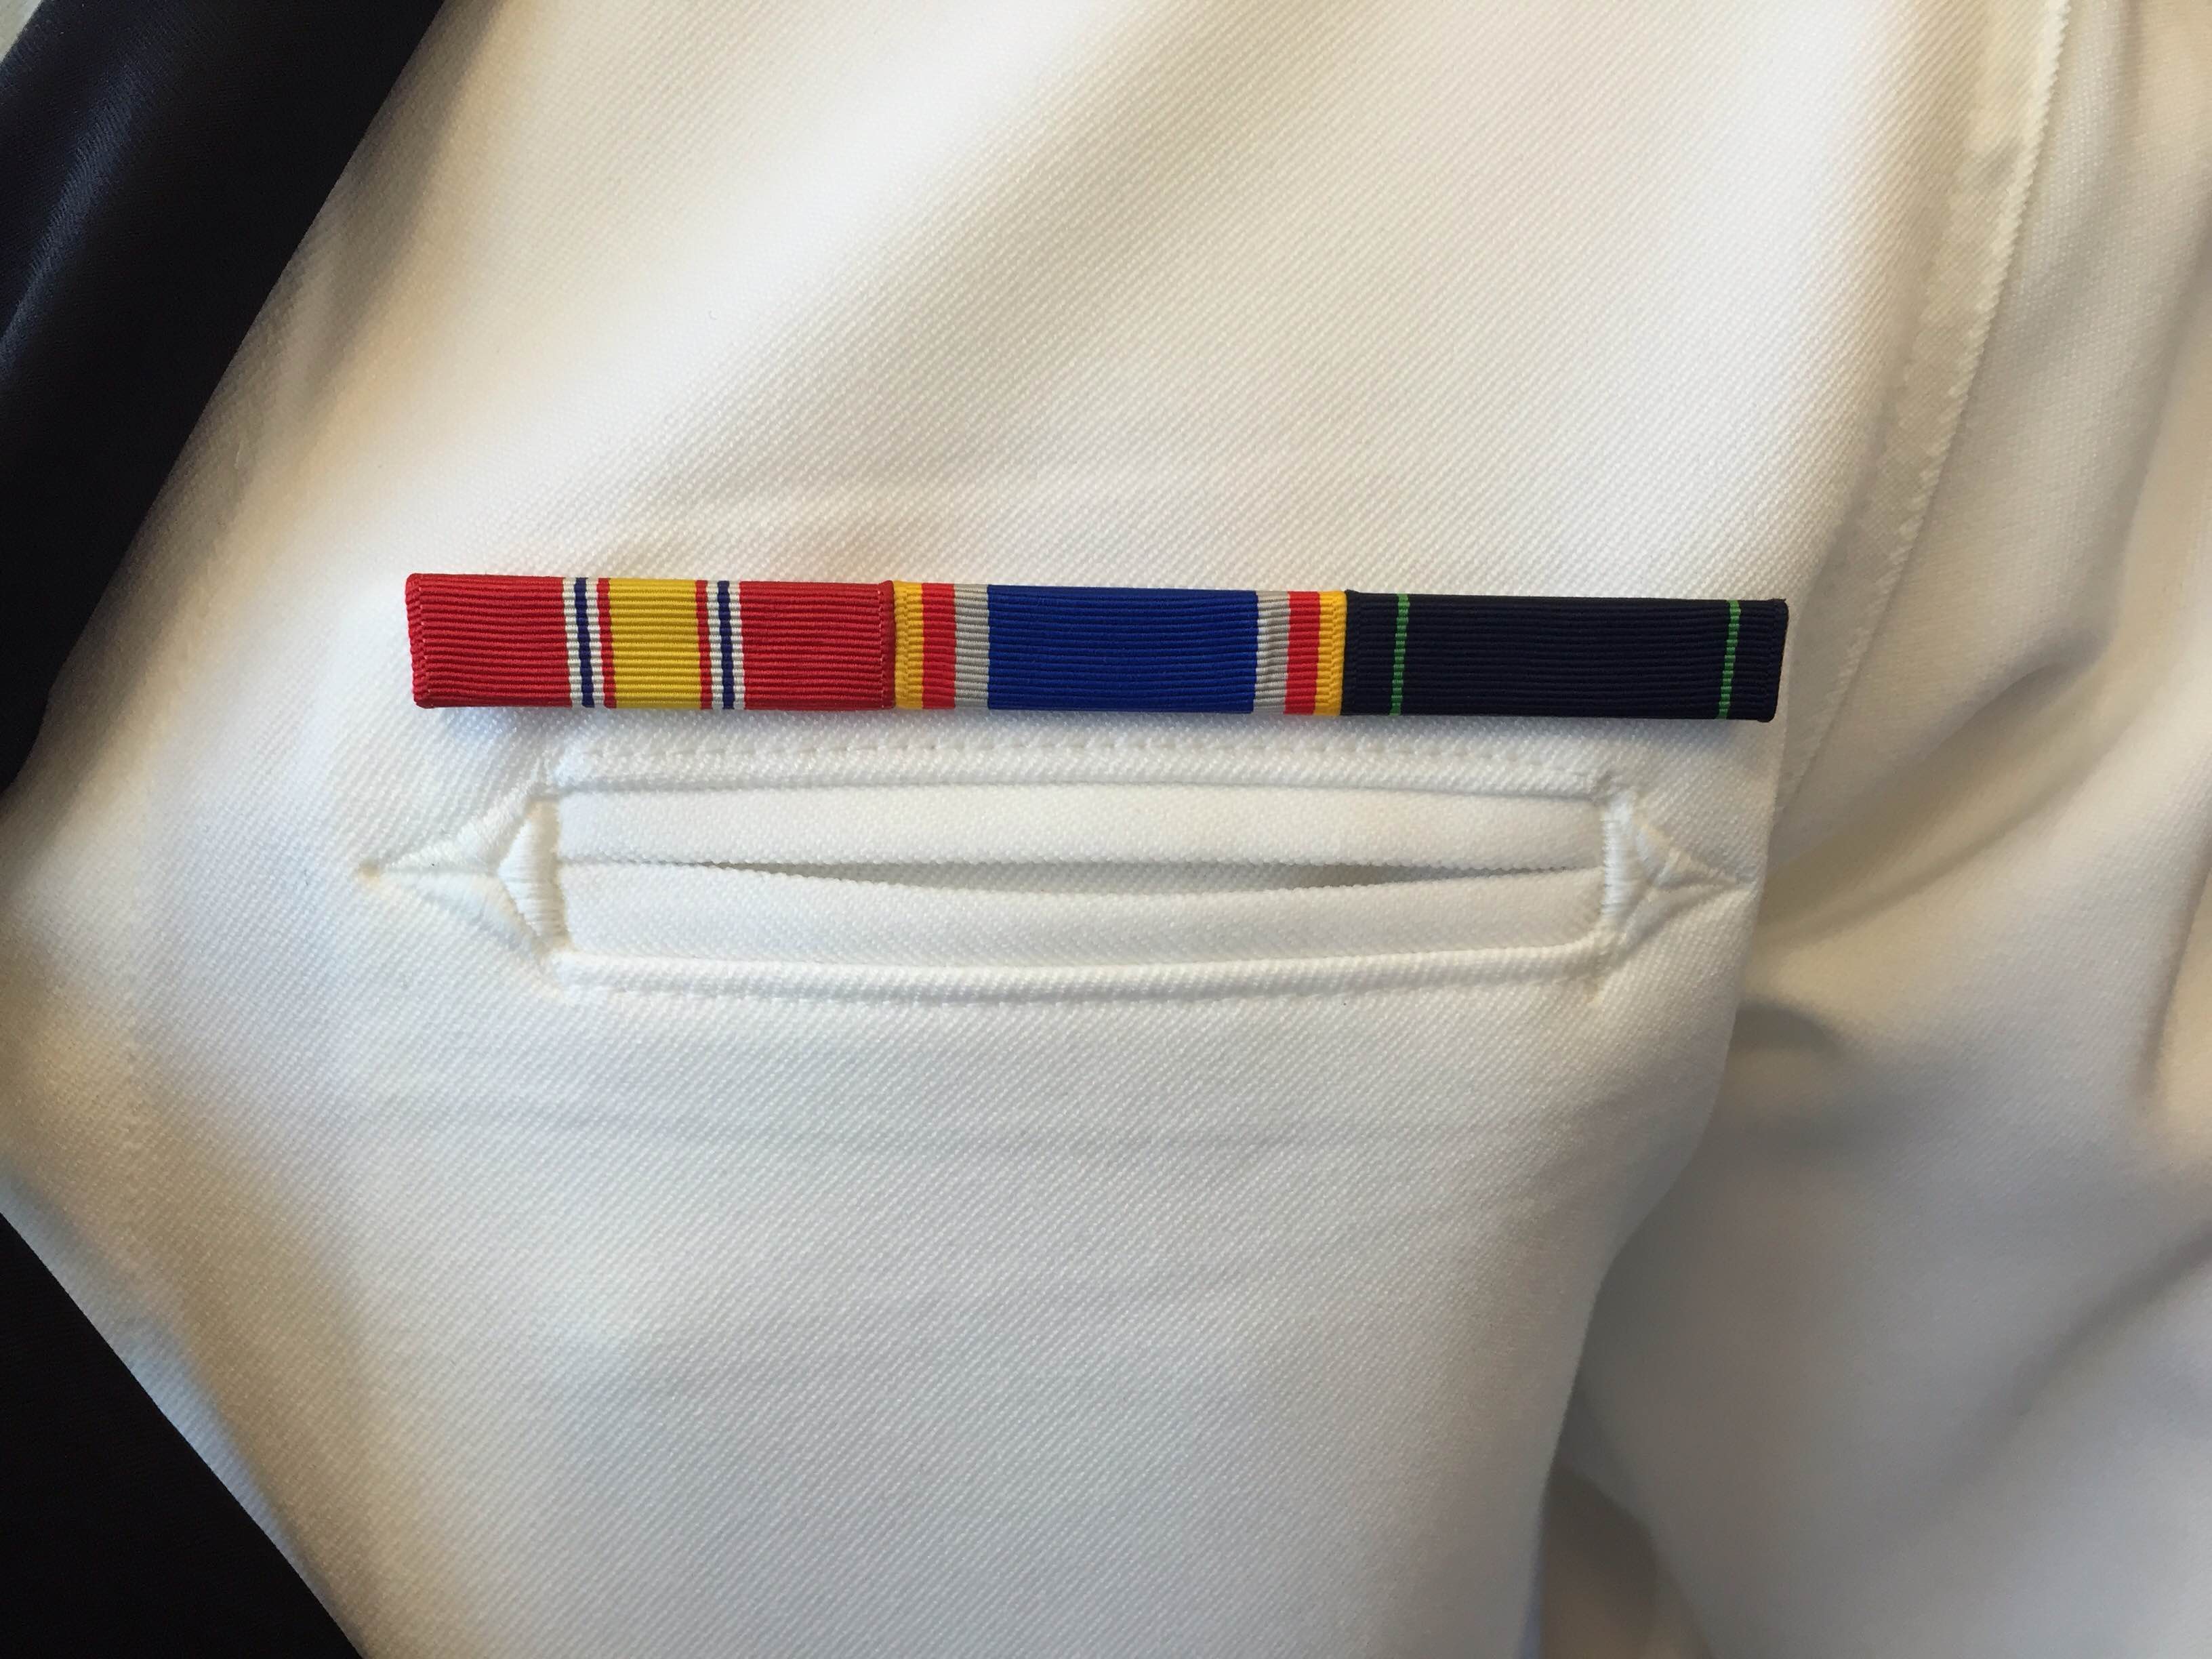 USAMM - Basic Military Training Honor Graduate Ribbon - Navy